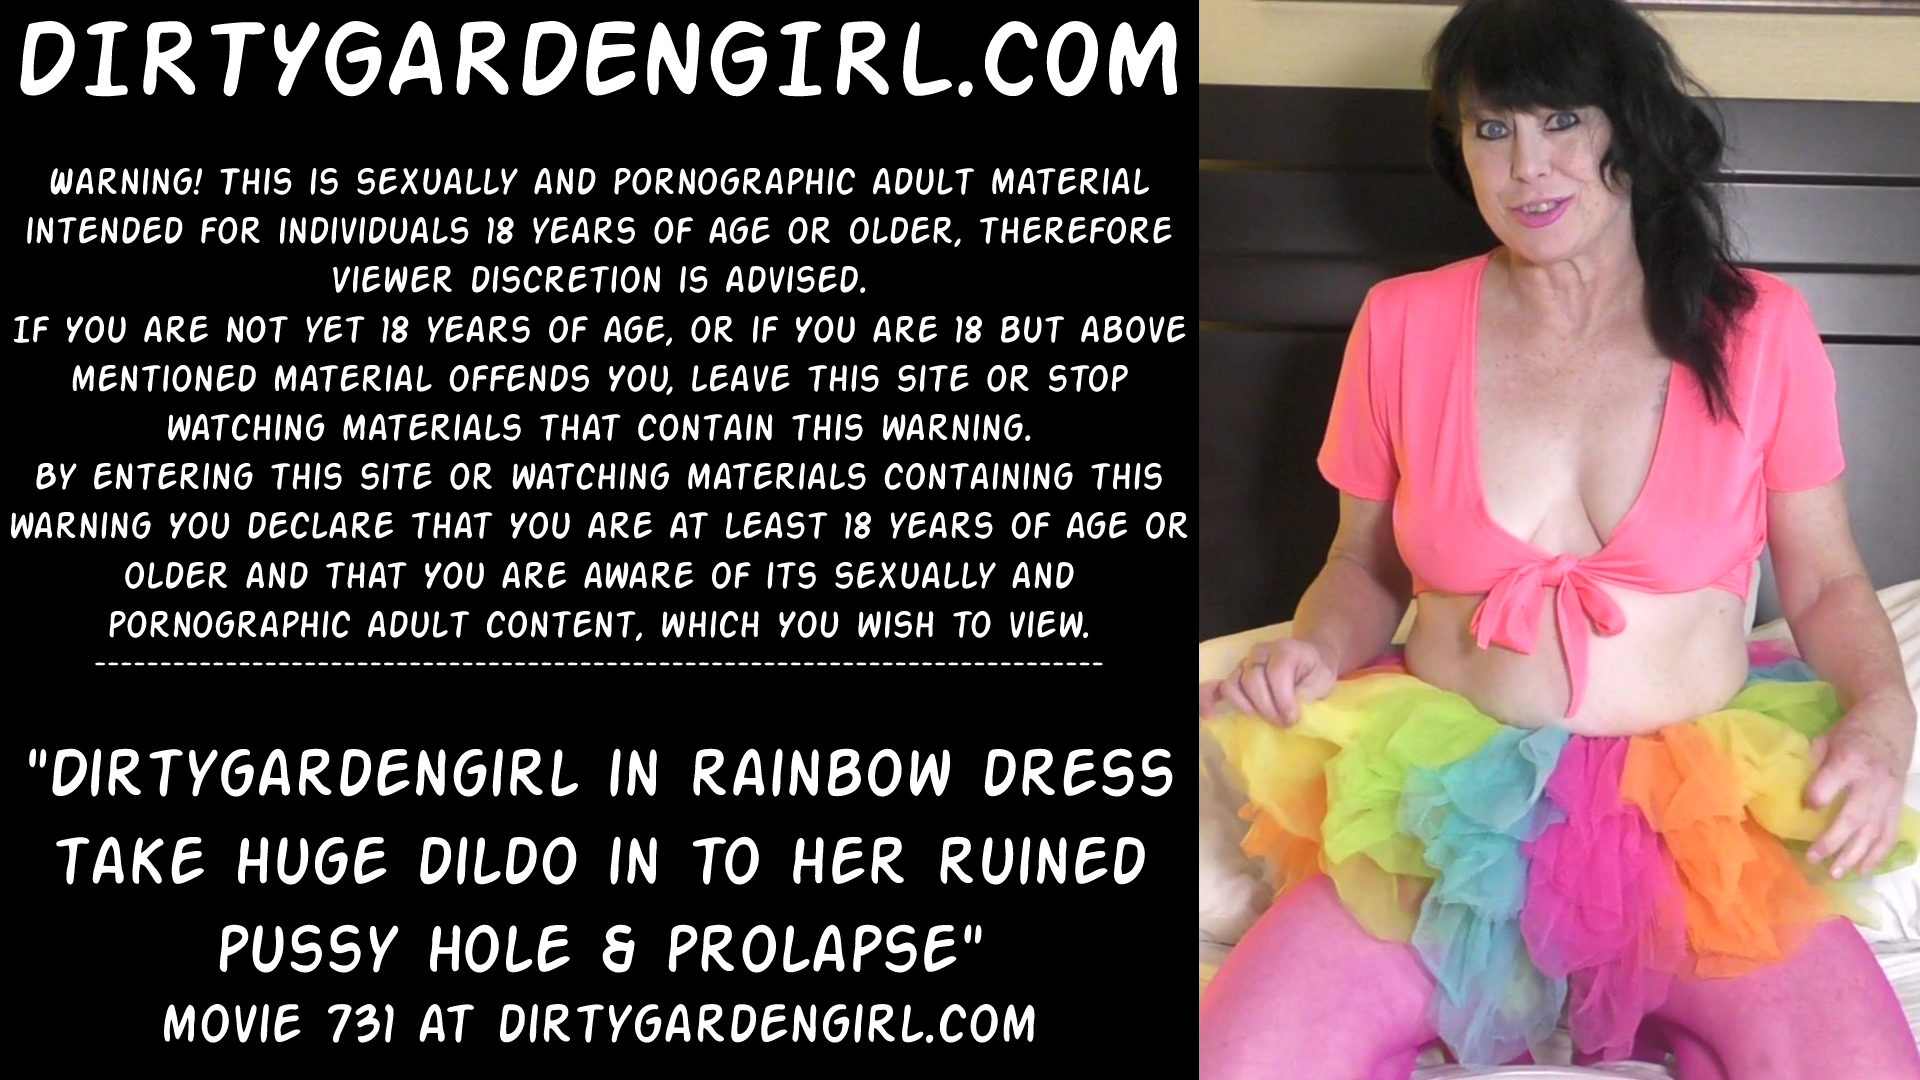 Dirtygardengirl in rainbow dress take huge dildo pussy